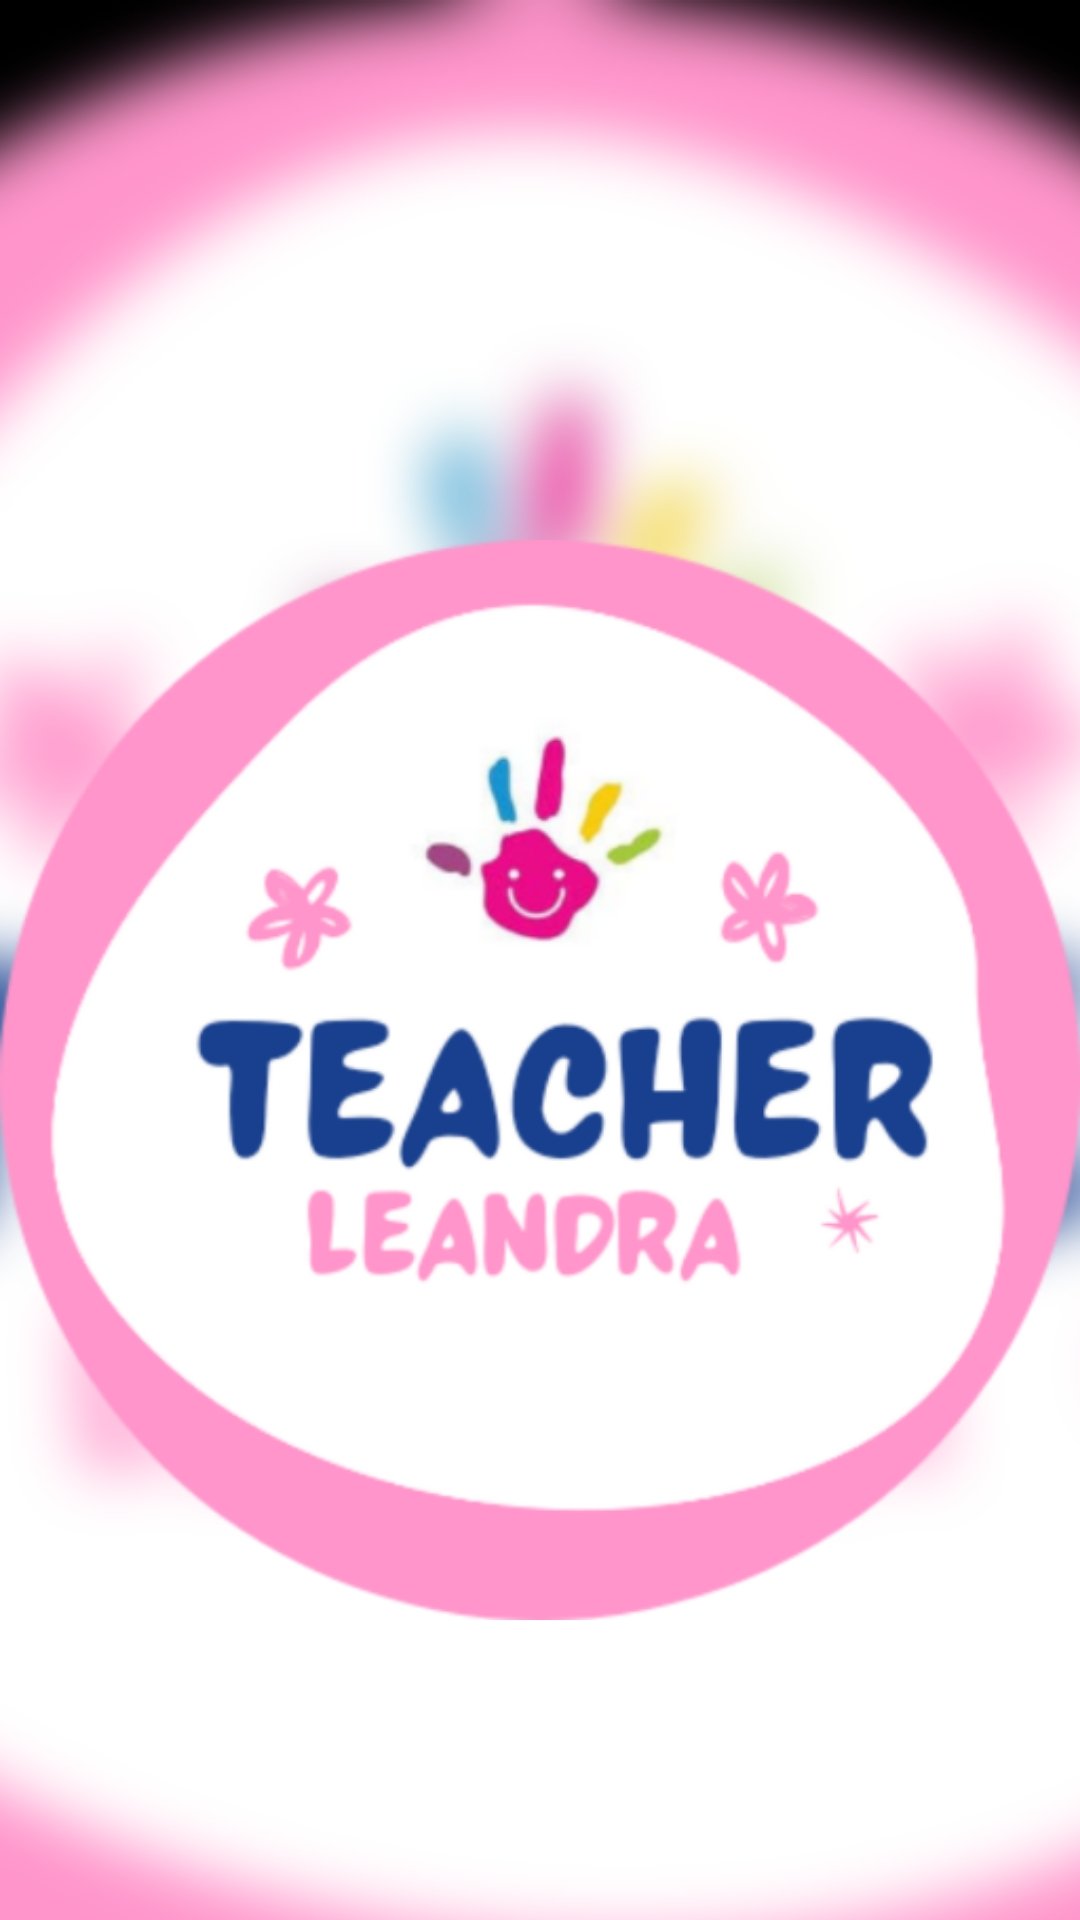 Teacher Leandra